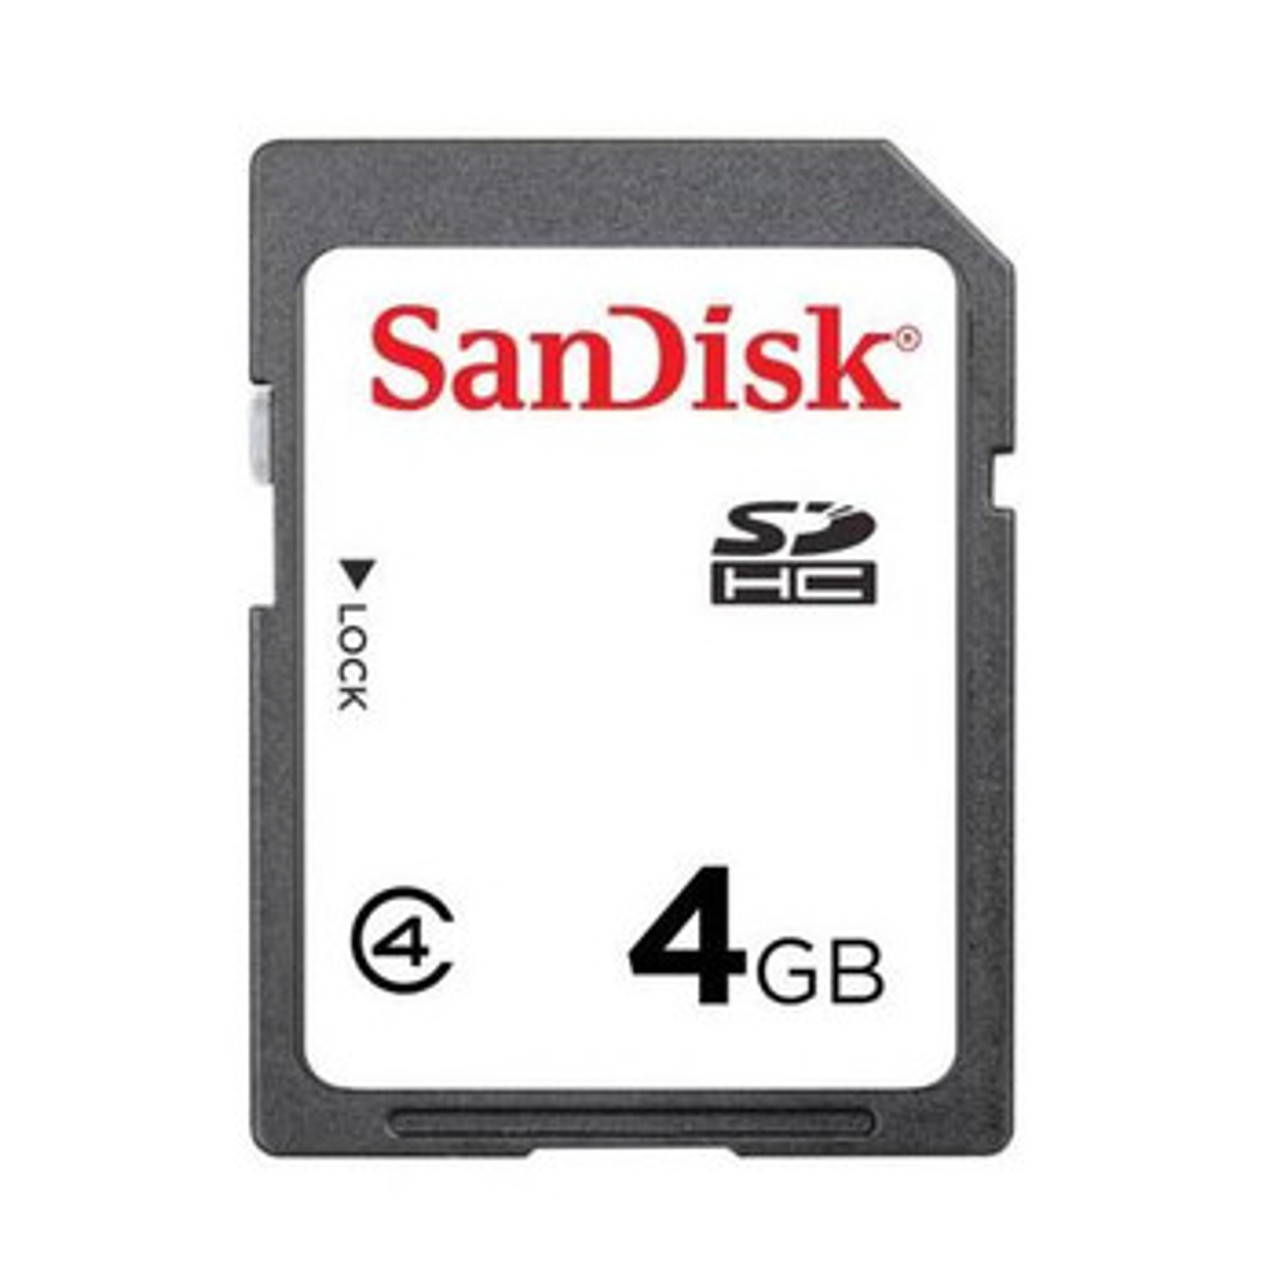 SDSDAA-004G-814 | Sandisk | 4Gb Class 4 Secure Digital High Capacity (Sdhc) Flash Memory Card